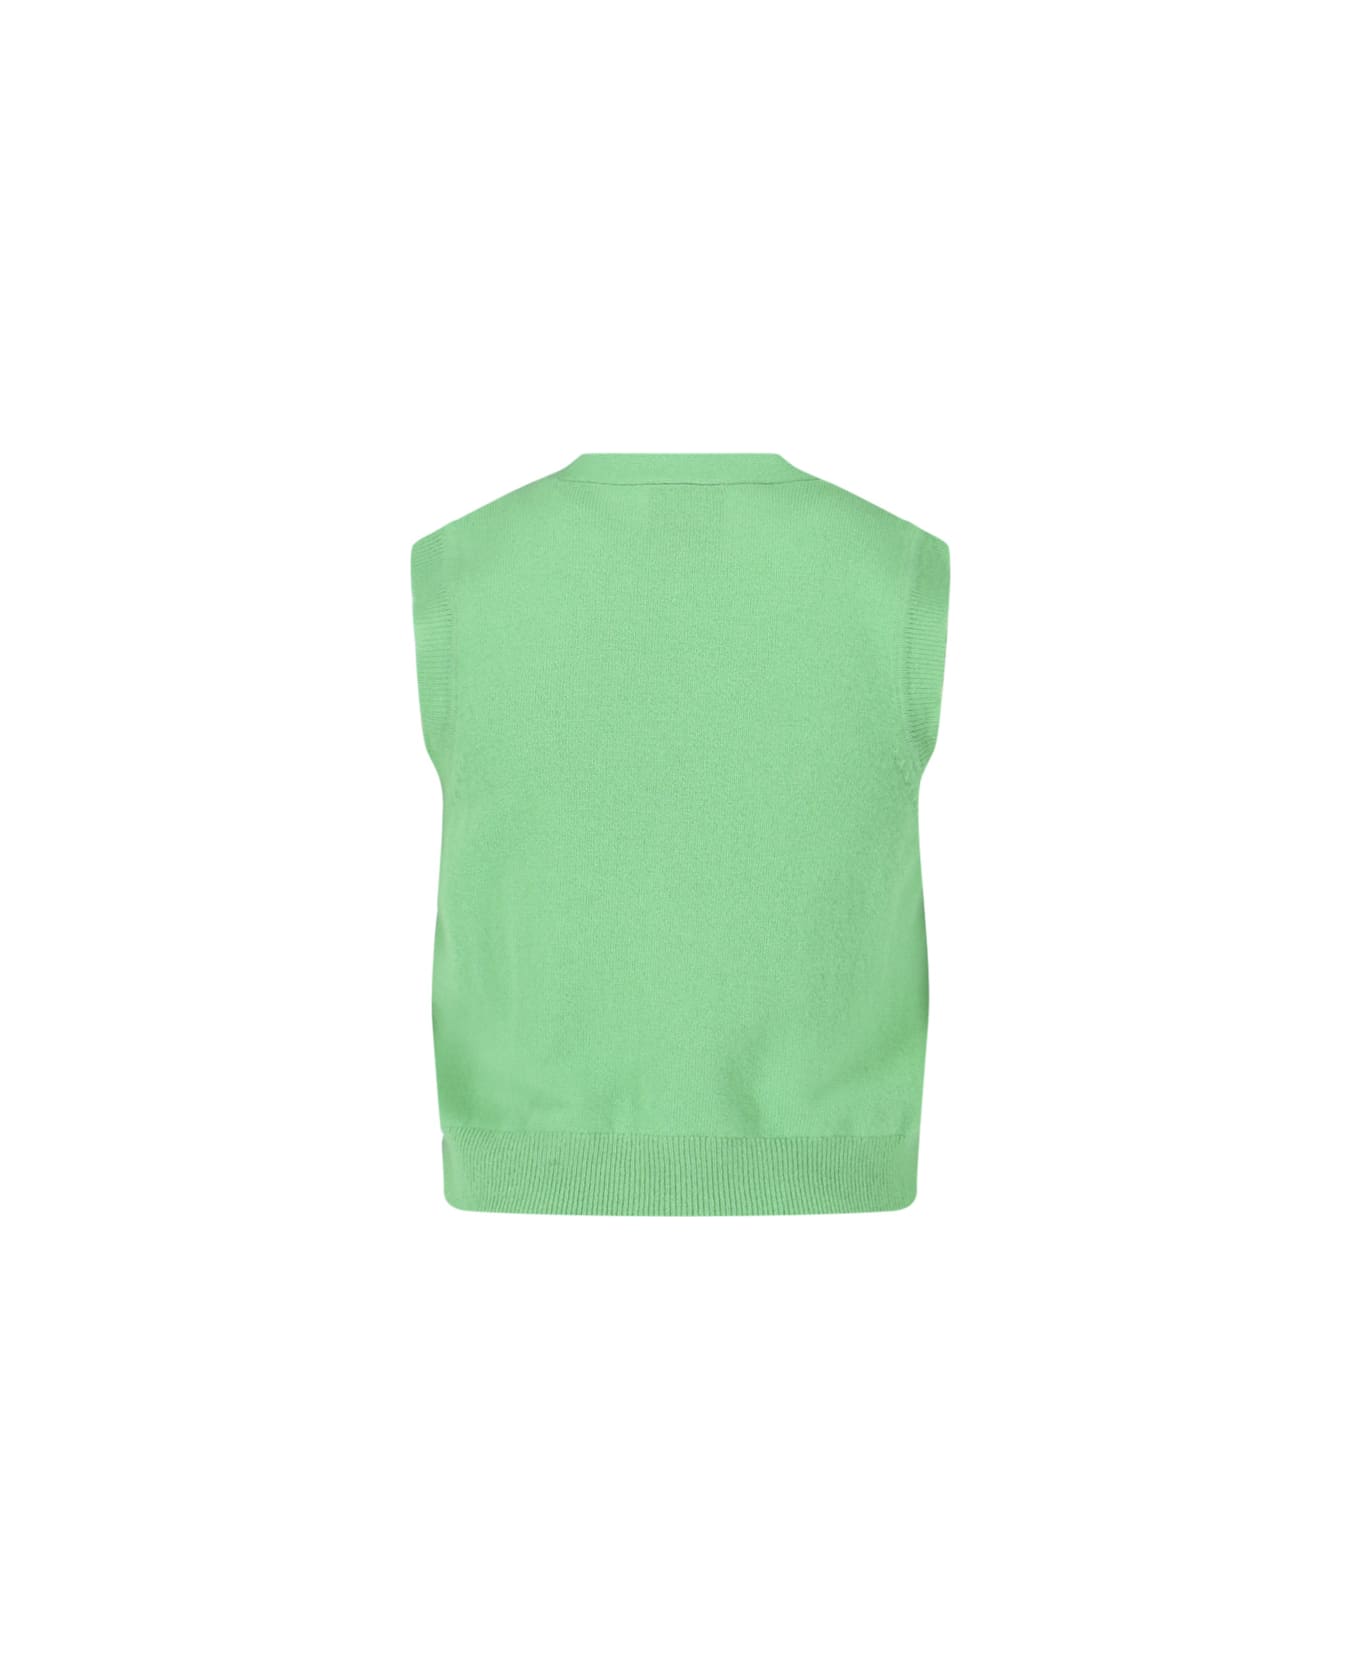 The Garment Vest "como" - Green